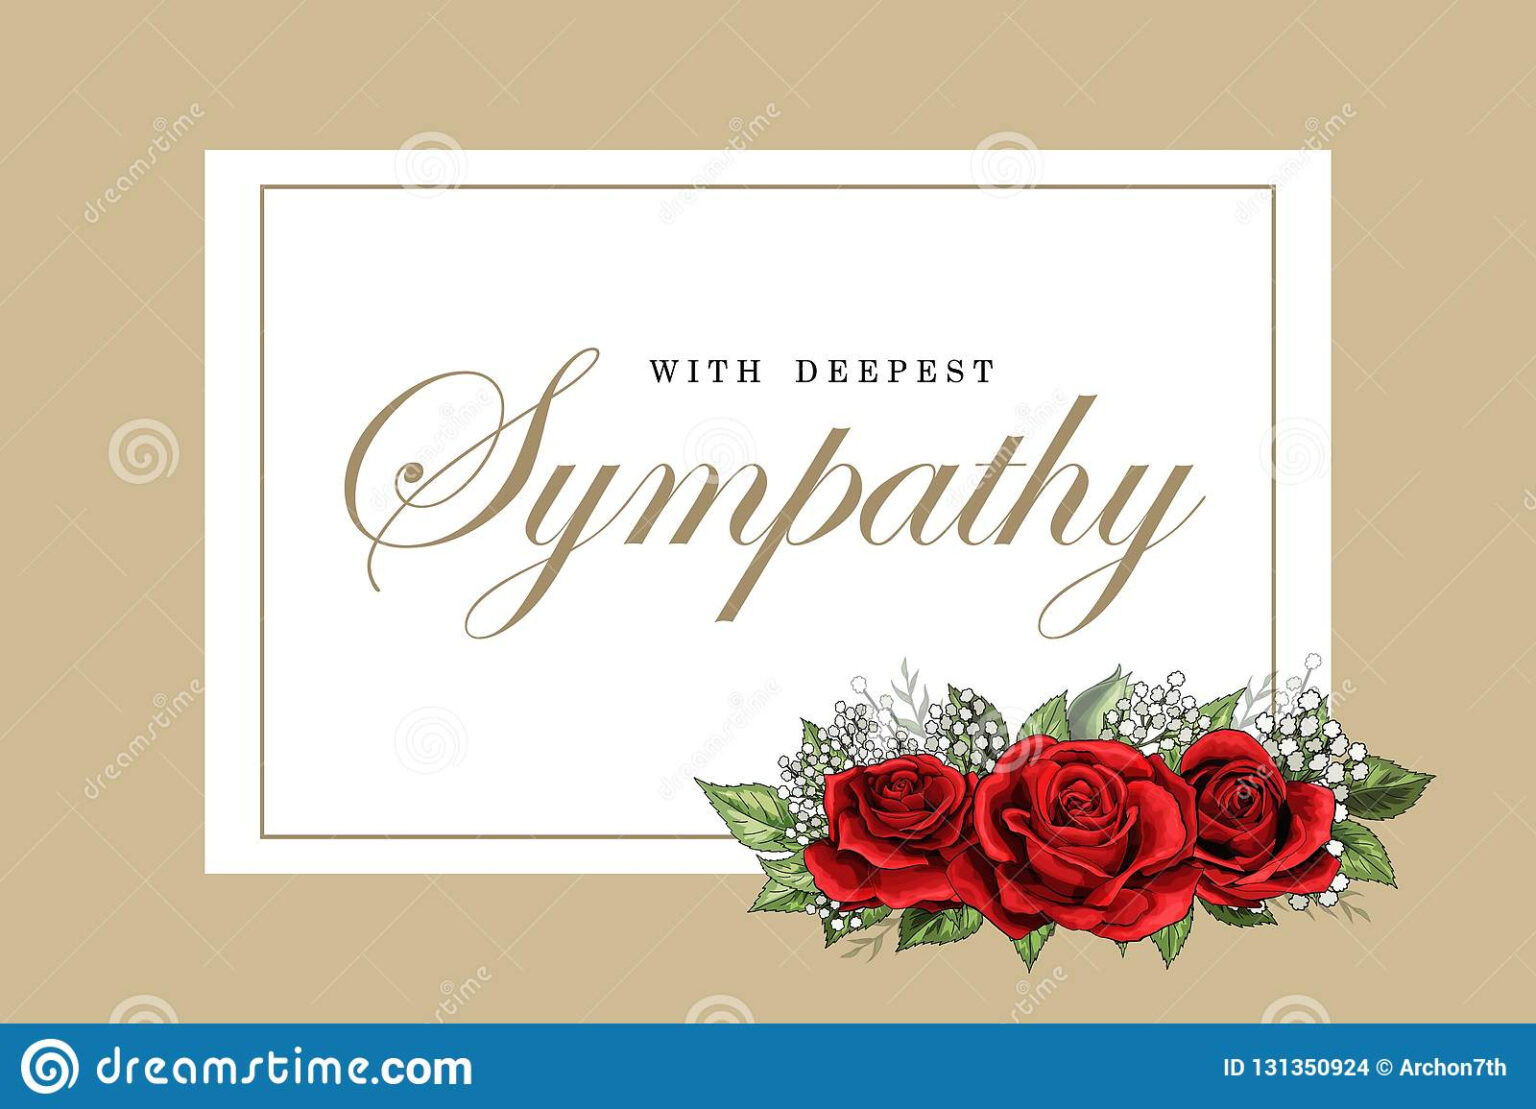 Diy Sympathy Card Template